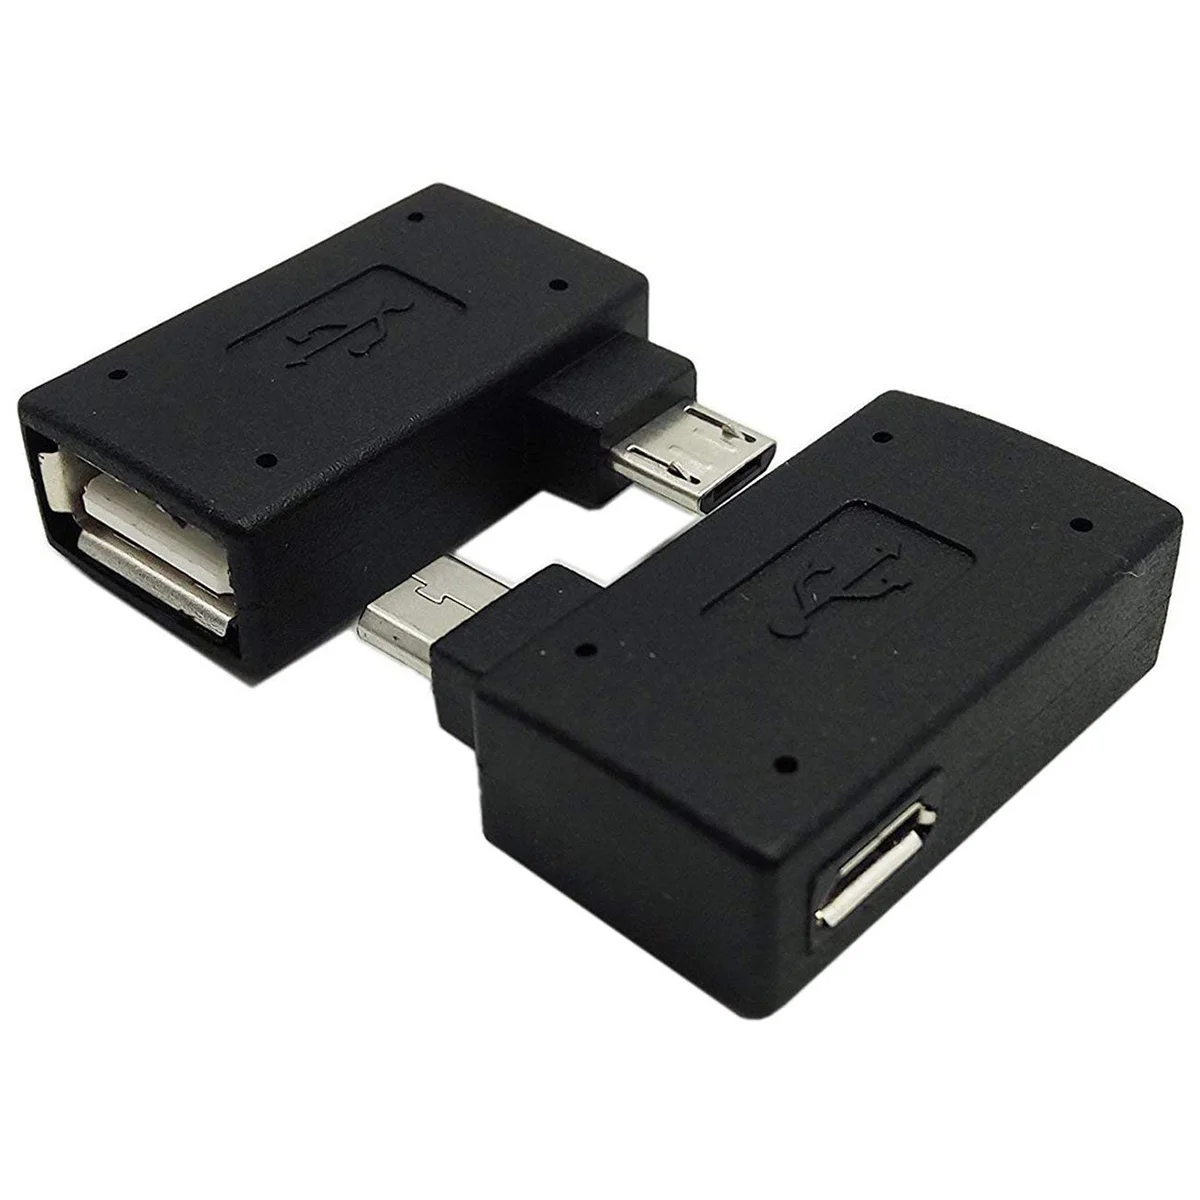 Переходник Micro-USB 2 0/хост-адаптер OTG 1 пара (левый + правый) под углом 90 градусов с